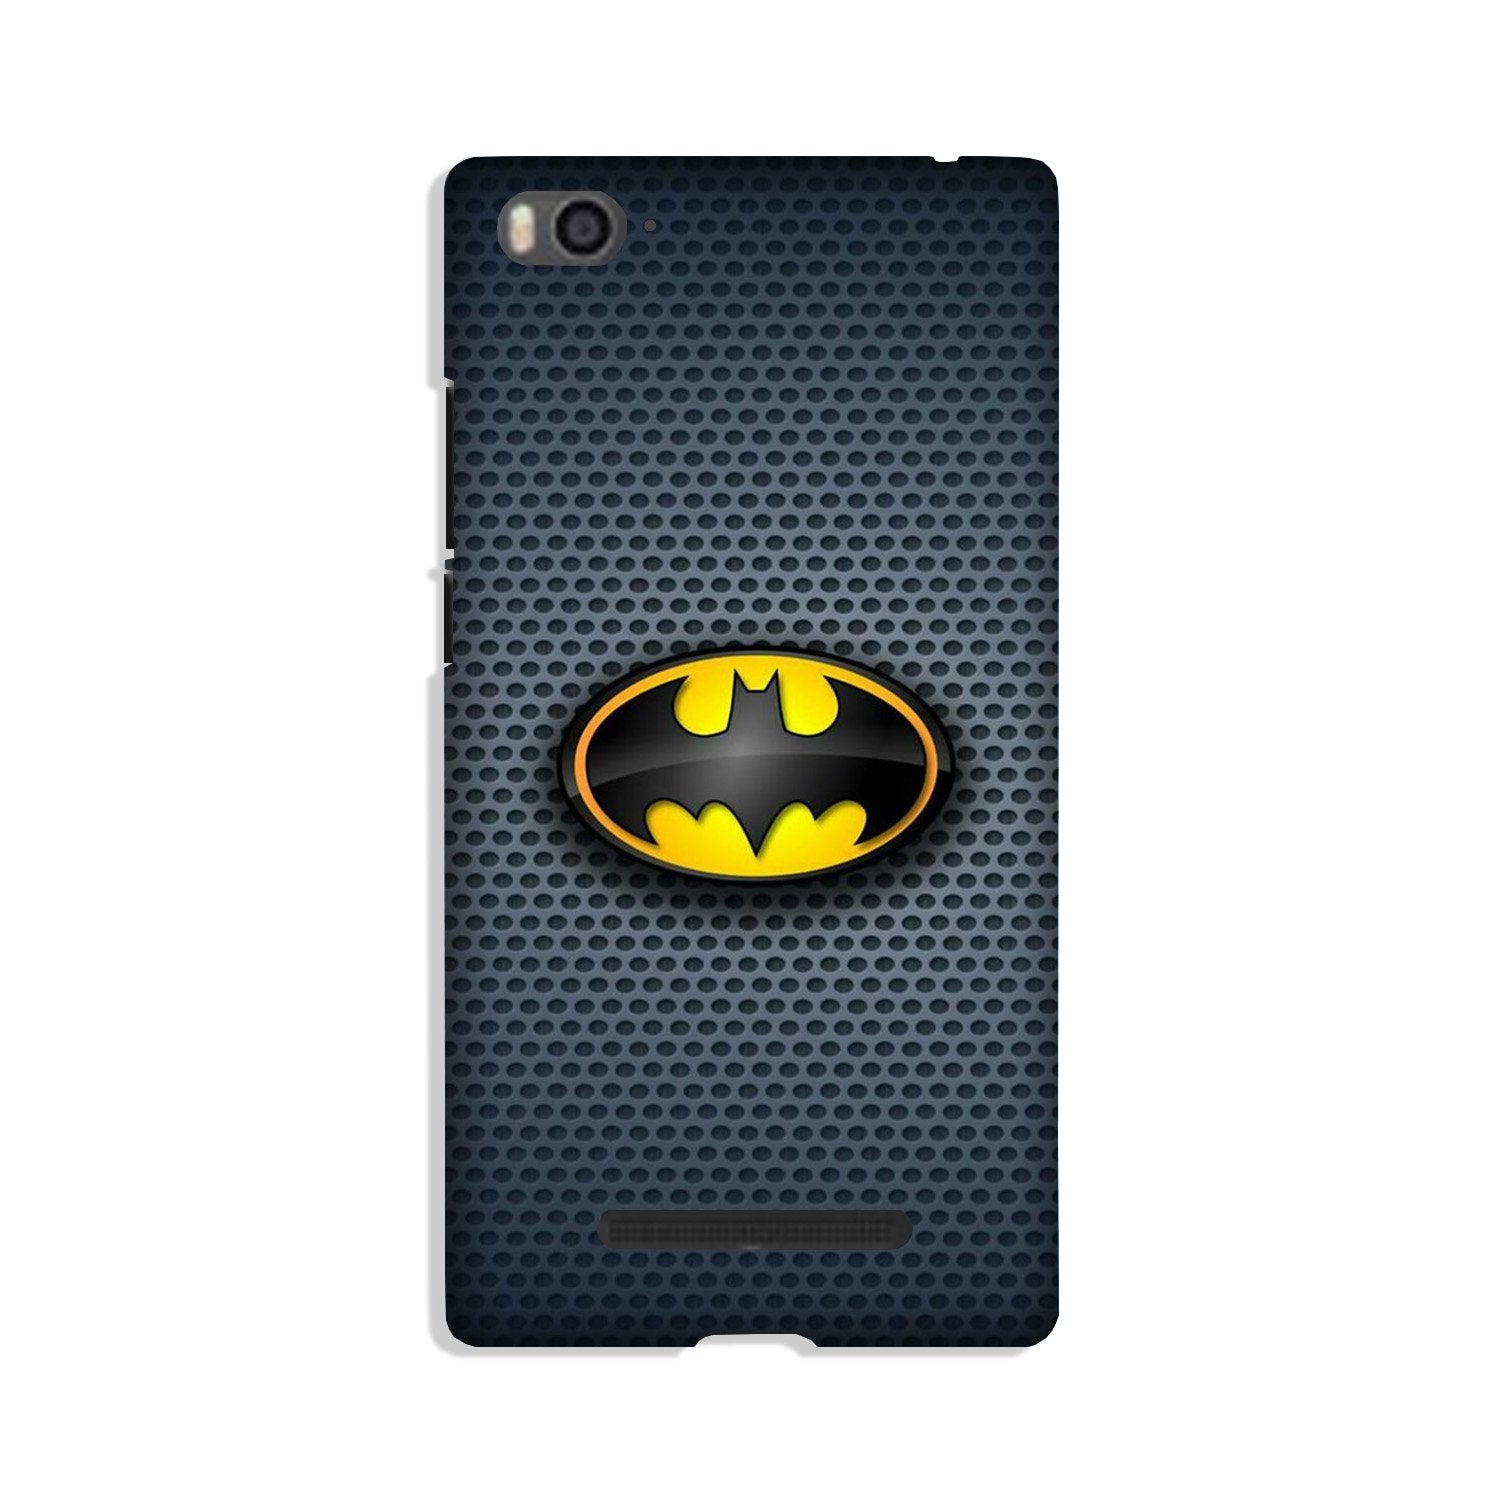 Batman Case for Xiaomi Redmi 5A (Design No. 244)